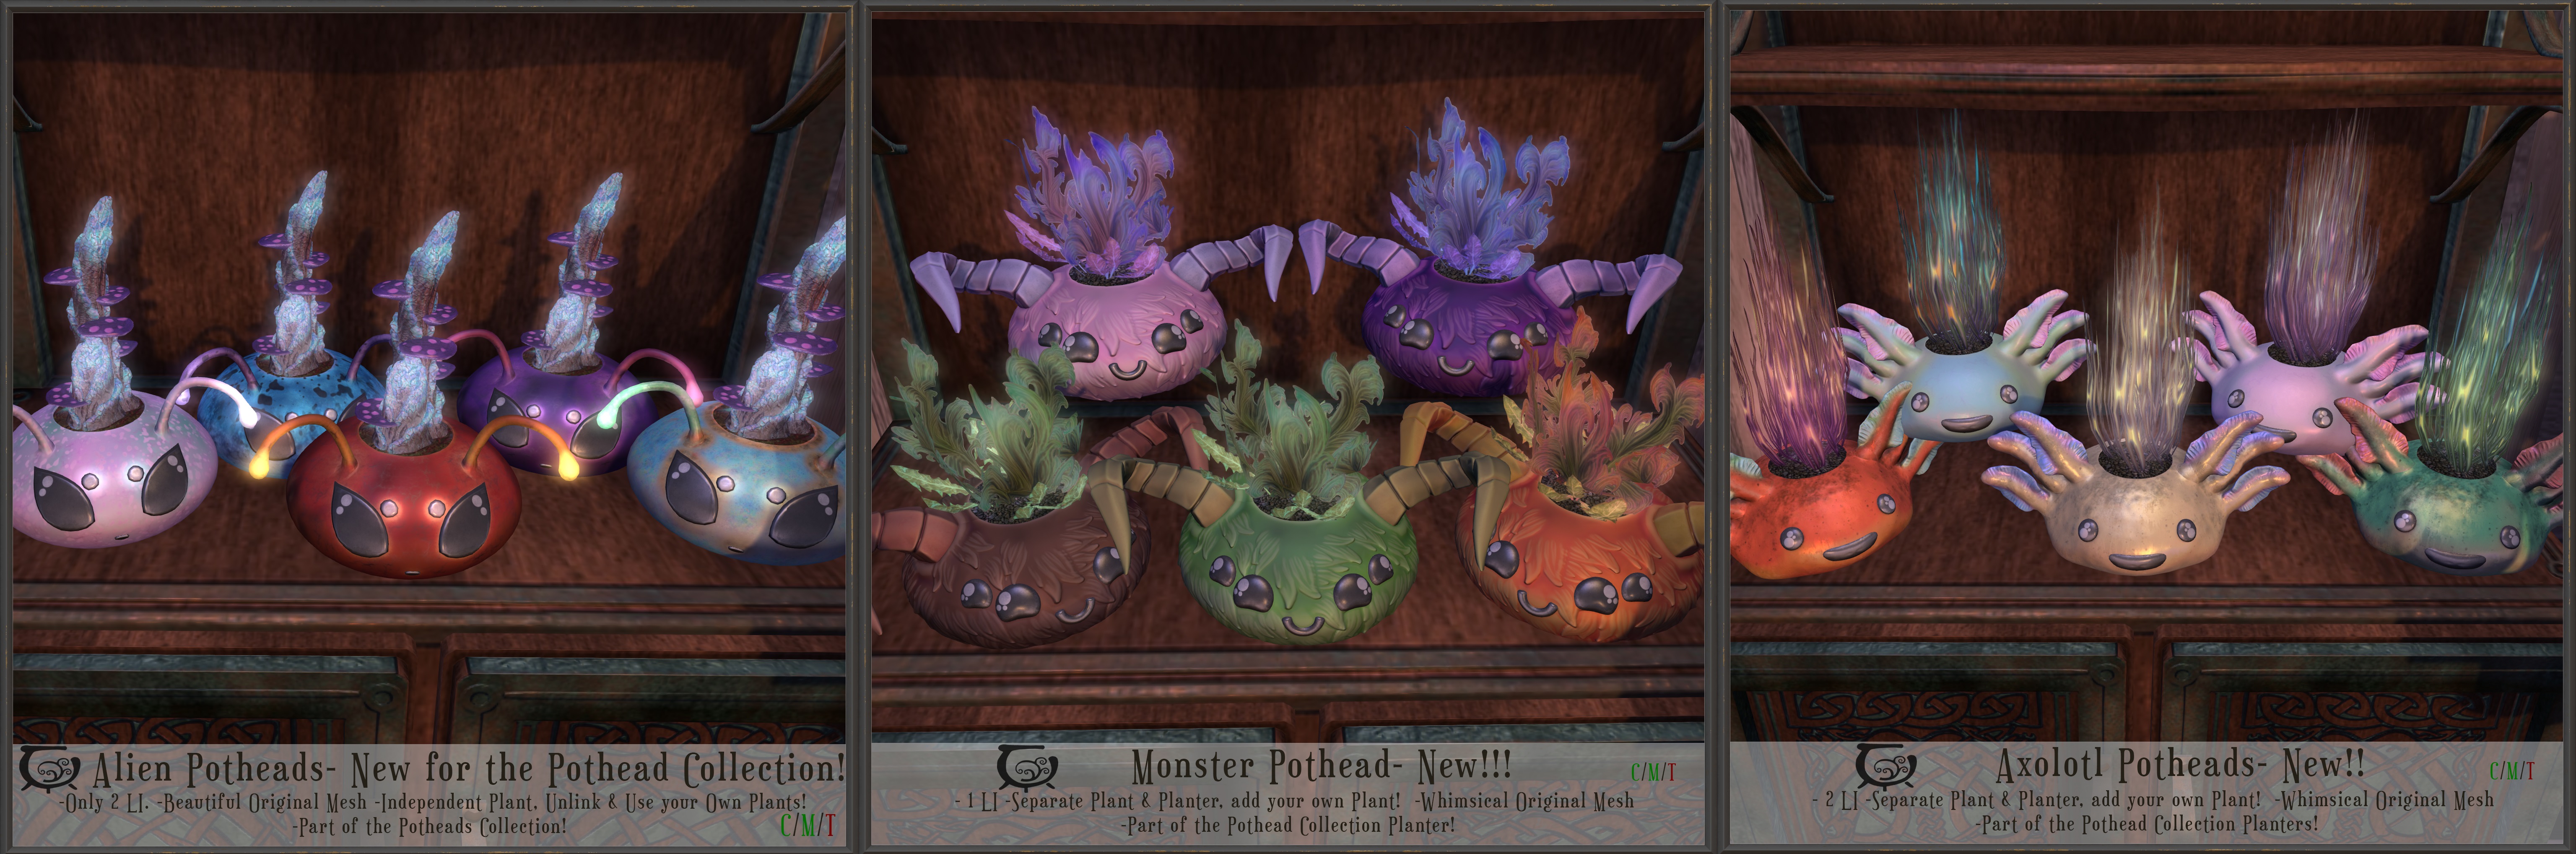 Cerridwen’s Cauldron – Alien, Monster, & Axolotl Potheads